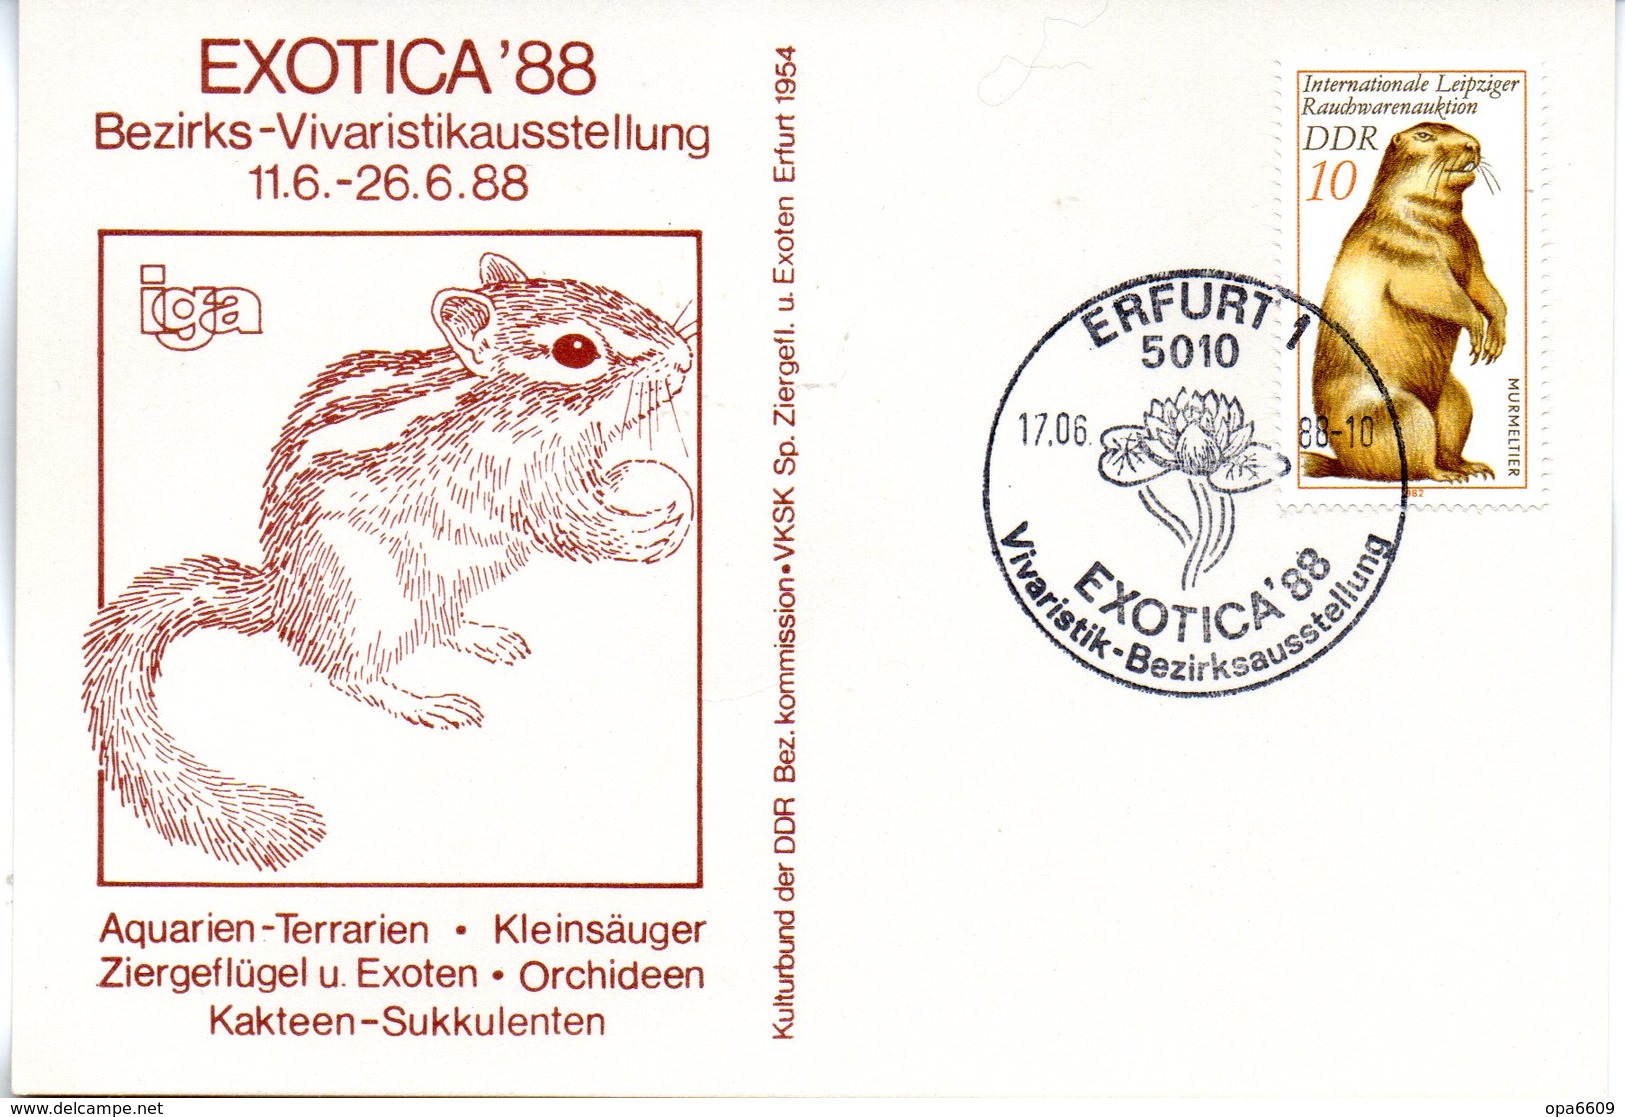 (DDR-B3) DDR Sonderkarte "Bezirks-Vivaristikausstellung EXOTICA'88", EF Mi 2677, SSt.17.6.1988 ERFURT 1 - Briefe U. Dokumente